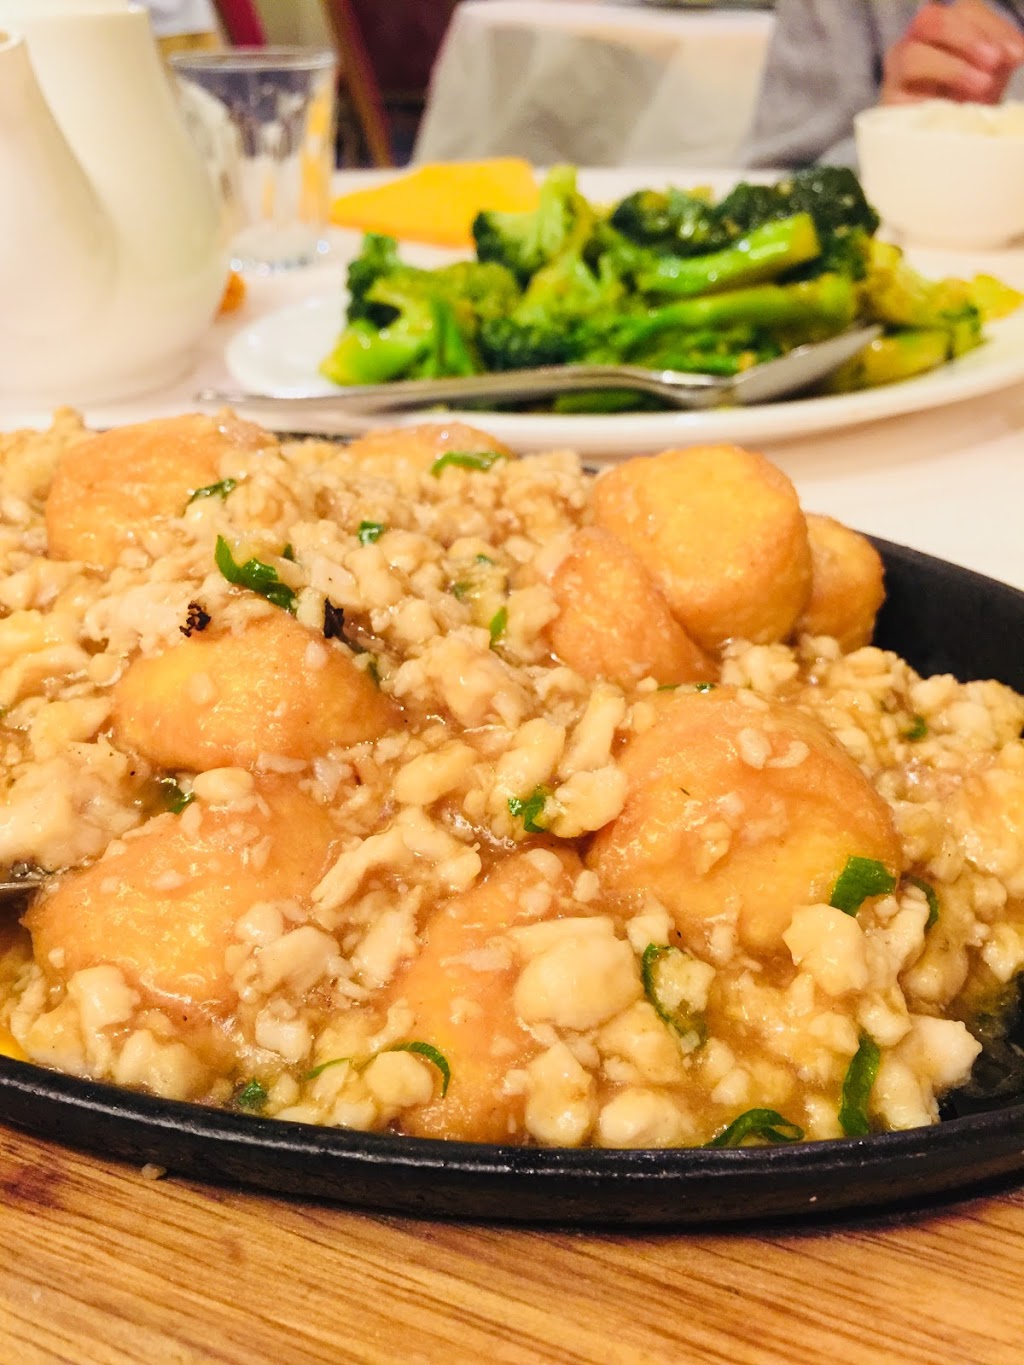 Chen's Garden Grenfell Sk : China Garden Restaurant - Meal takeaway